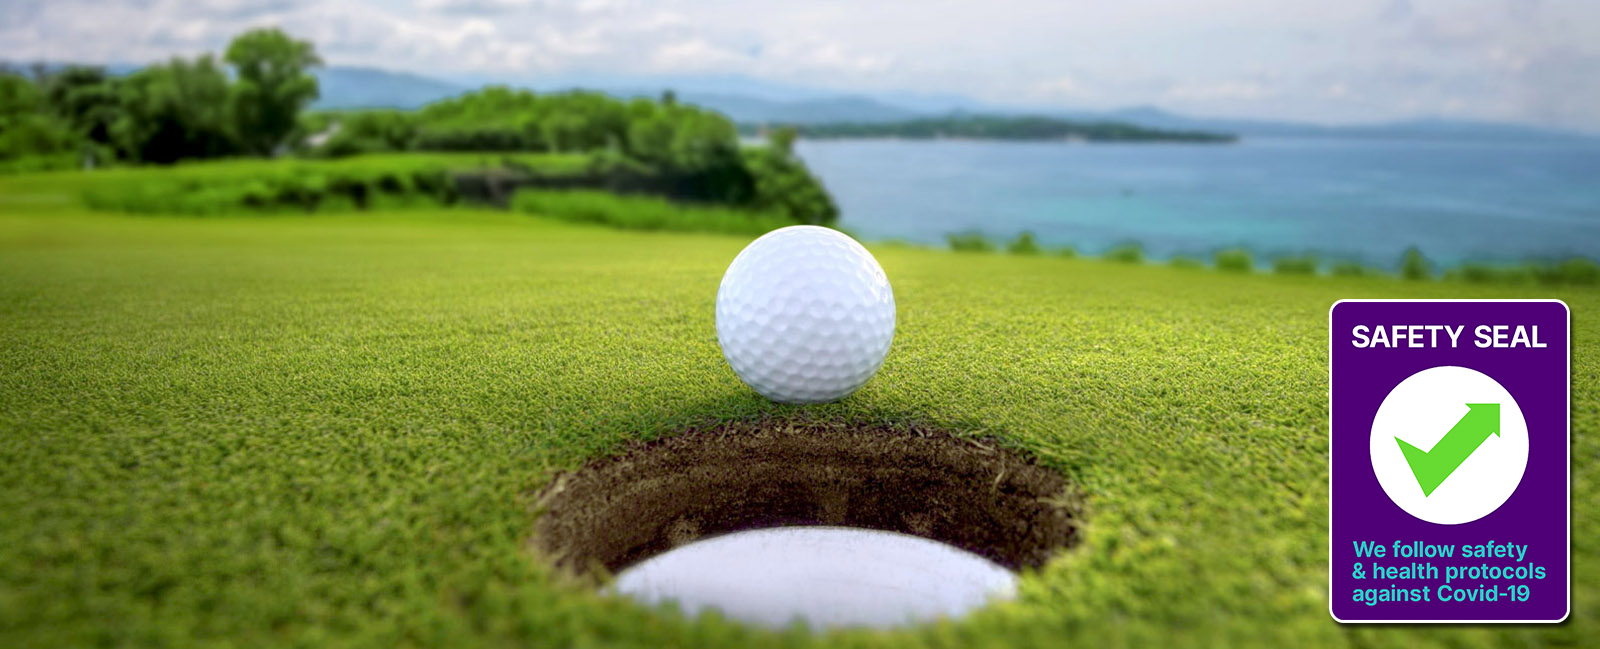 golf memberships page website header announcement 1600 x 649 1